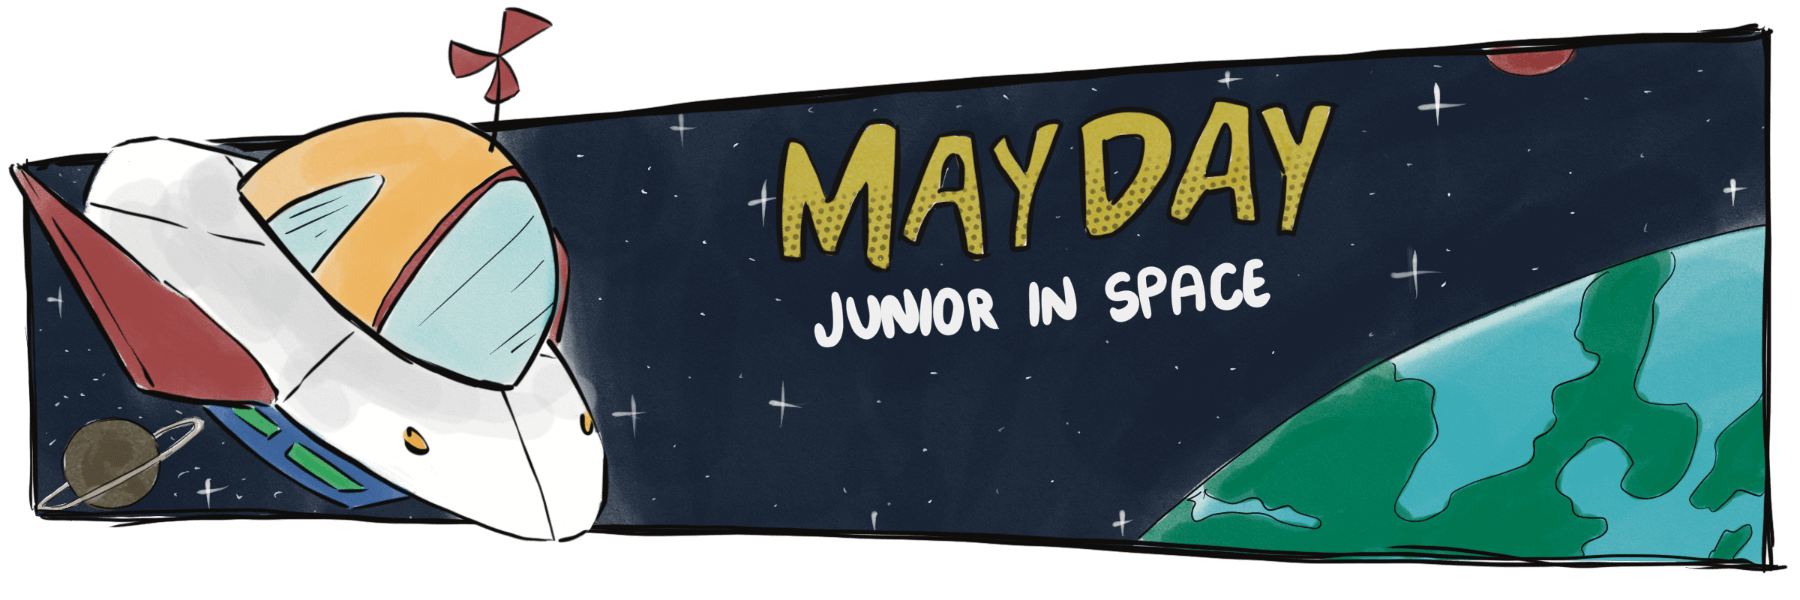 Junior in Space - Mayday!